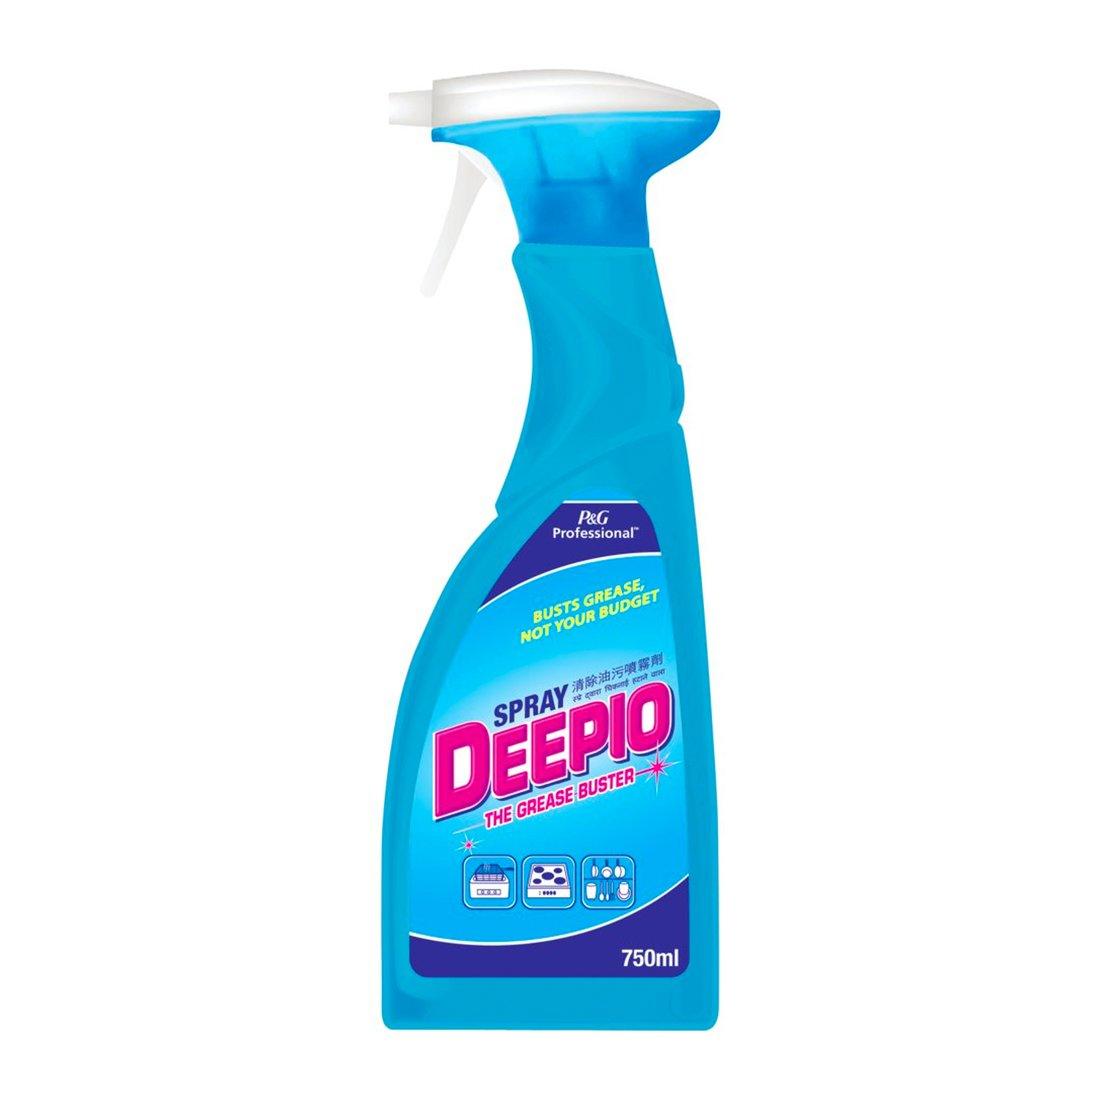 Deepio Professional - Degreaser Spray - 750ml - Vending Superstore